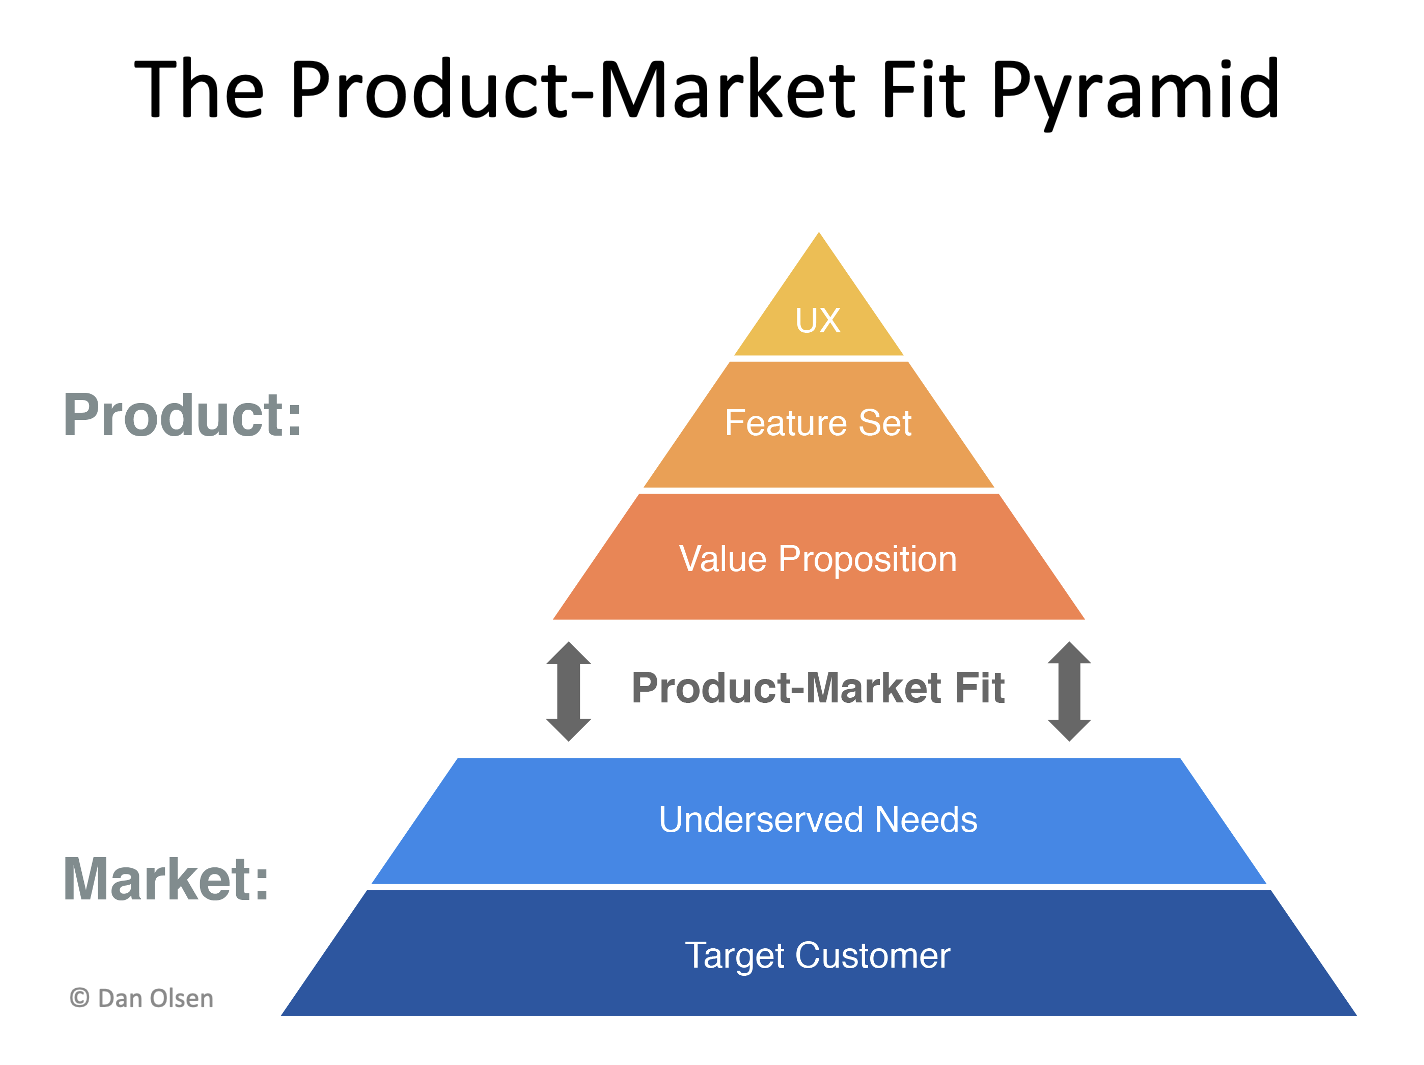 Dan Olsen's Product Market Fit pyramid